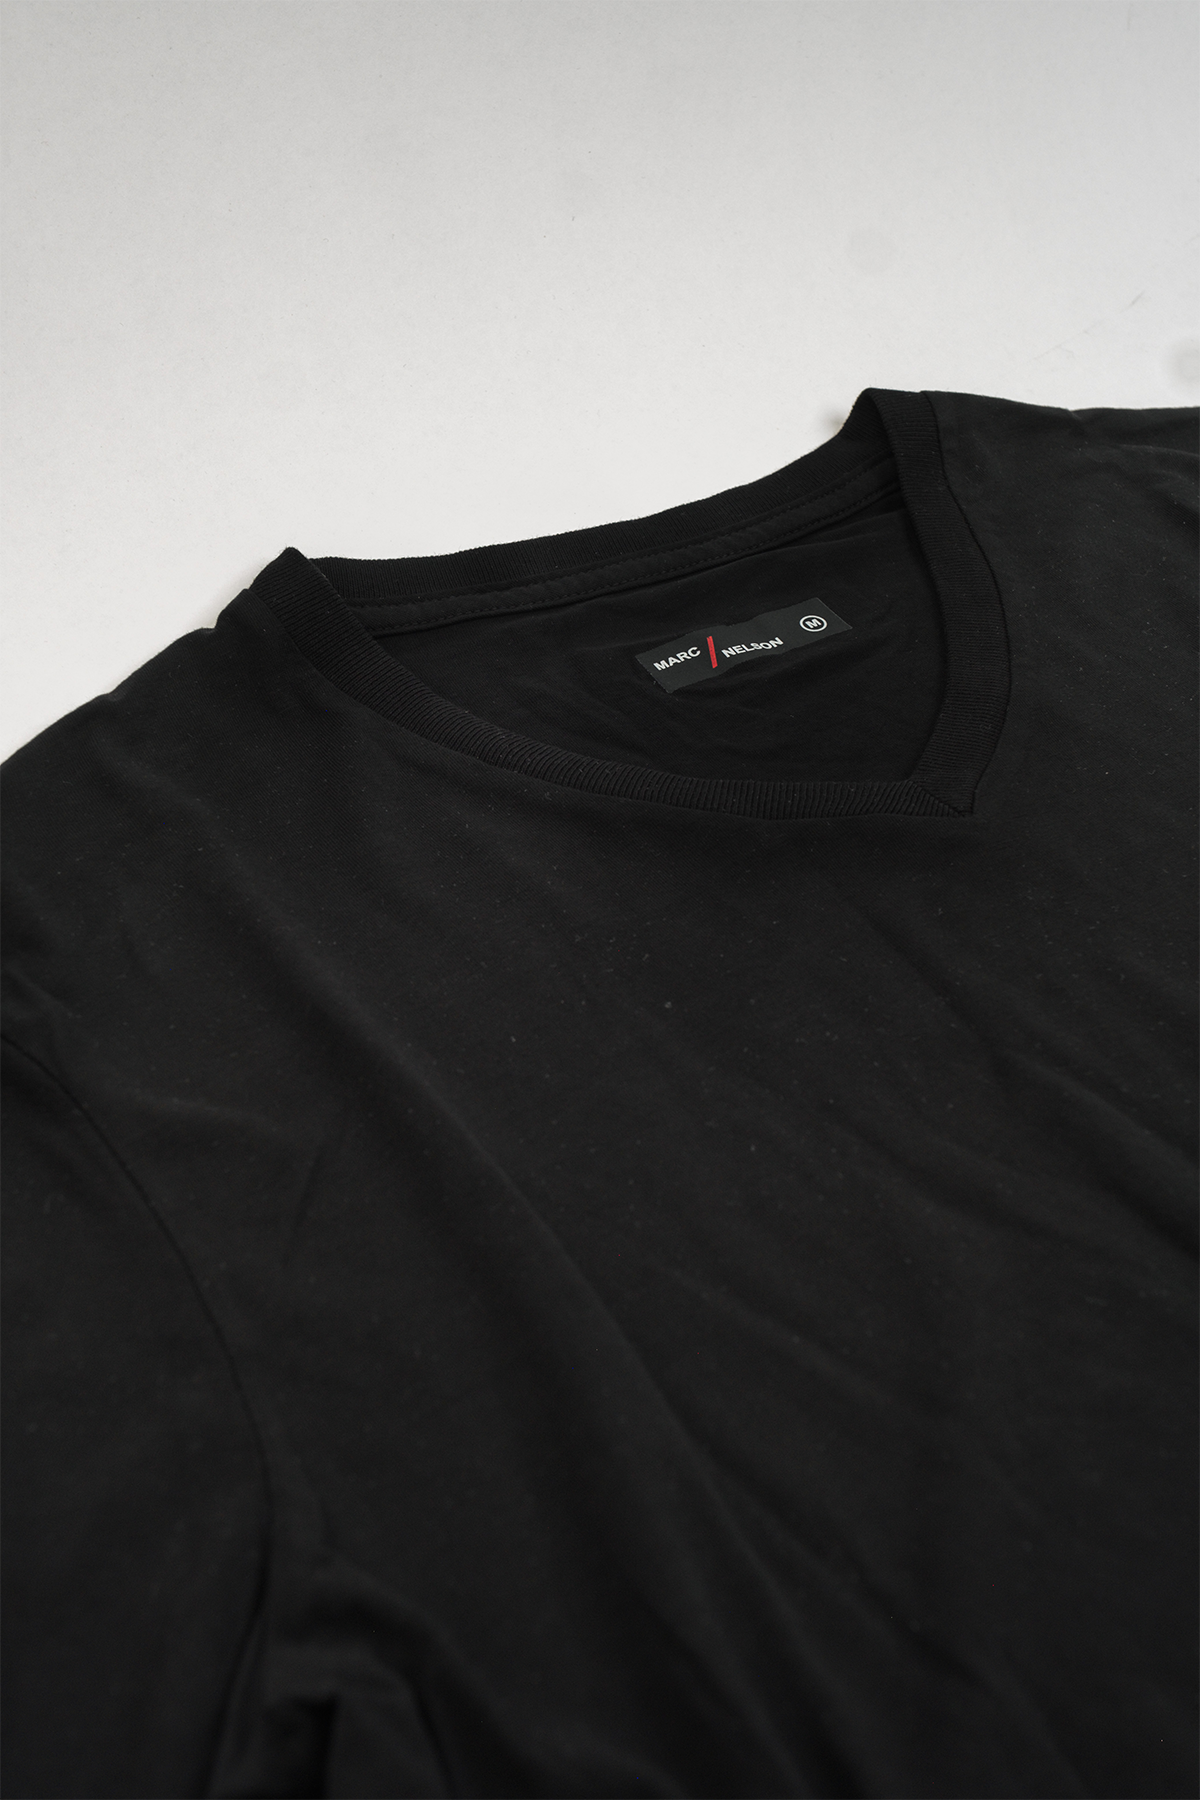 Close up of black v-neck t-shirt laid flat on a white background.